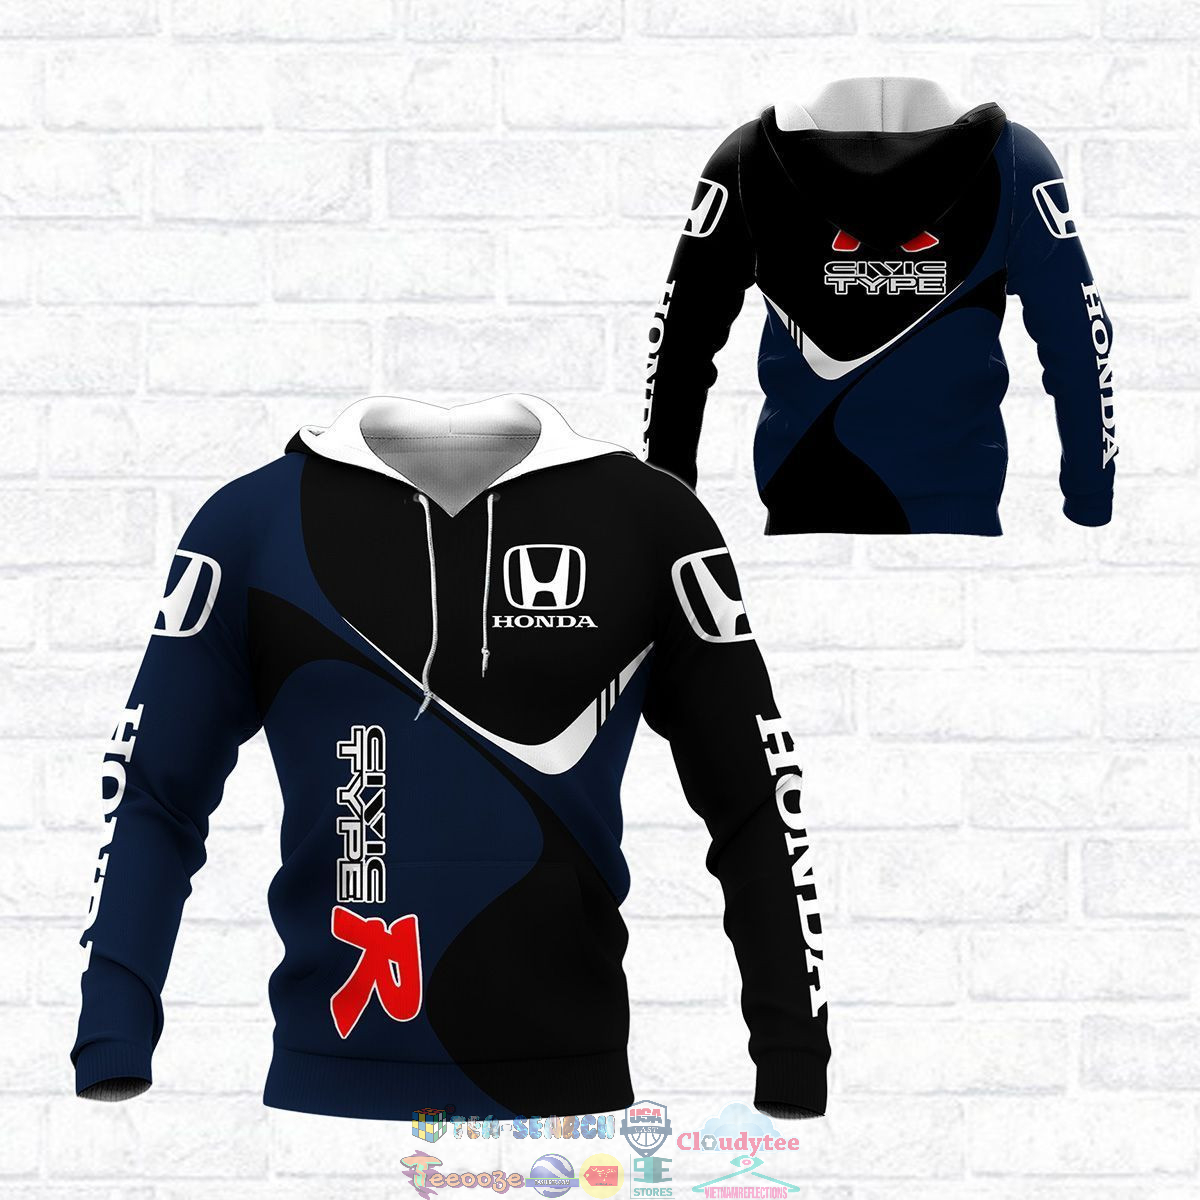 Honda Civic Type R ver 10 3D hoodie and t-shirt